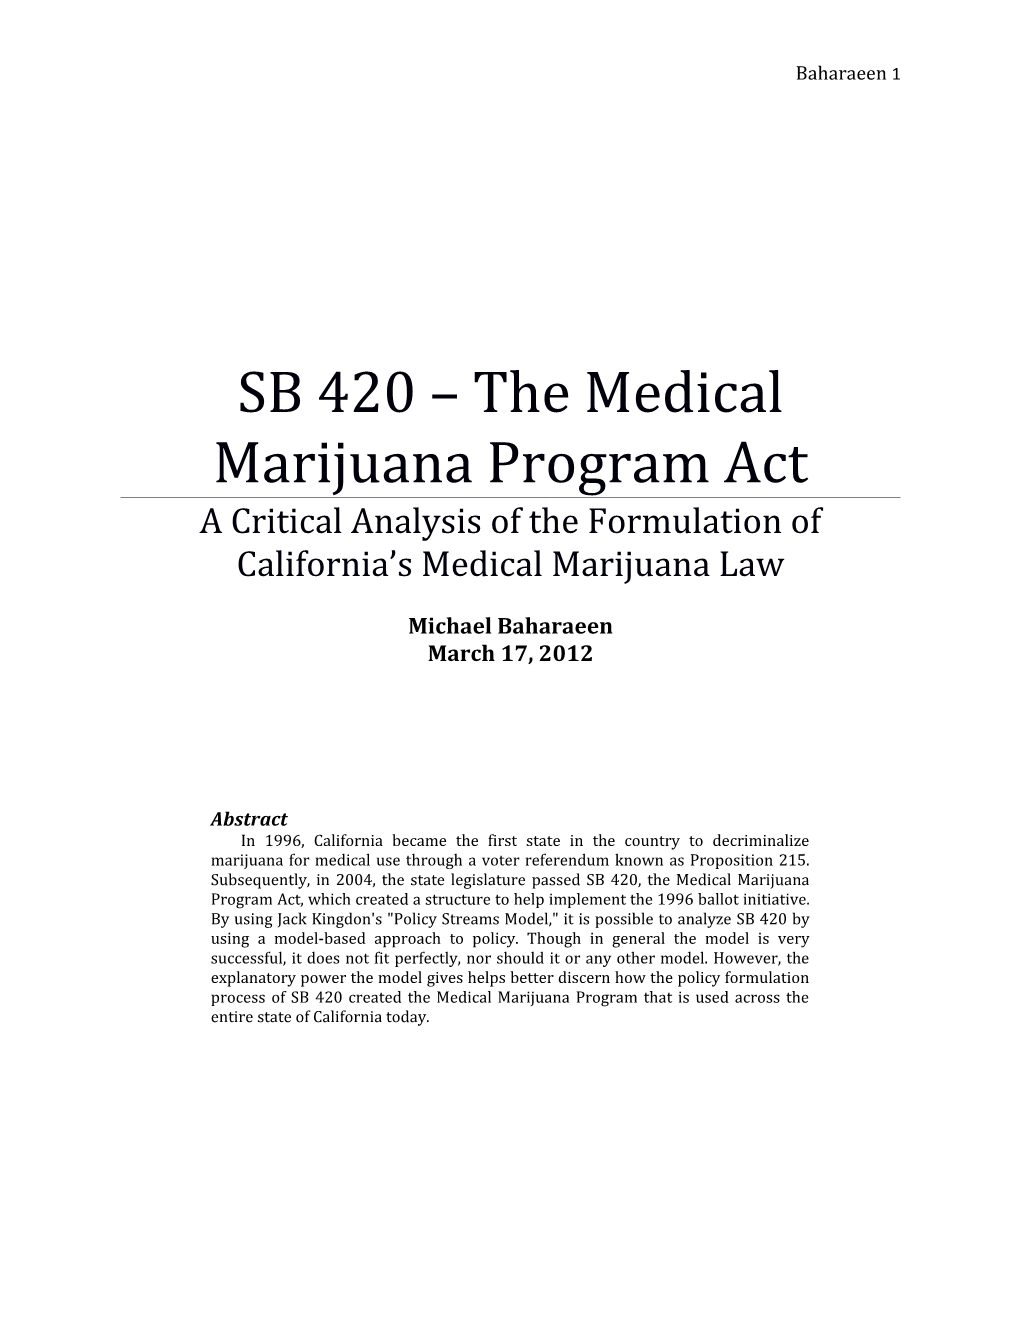 SB 420 the Medical Marijuana Program Act